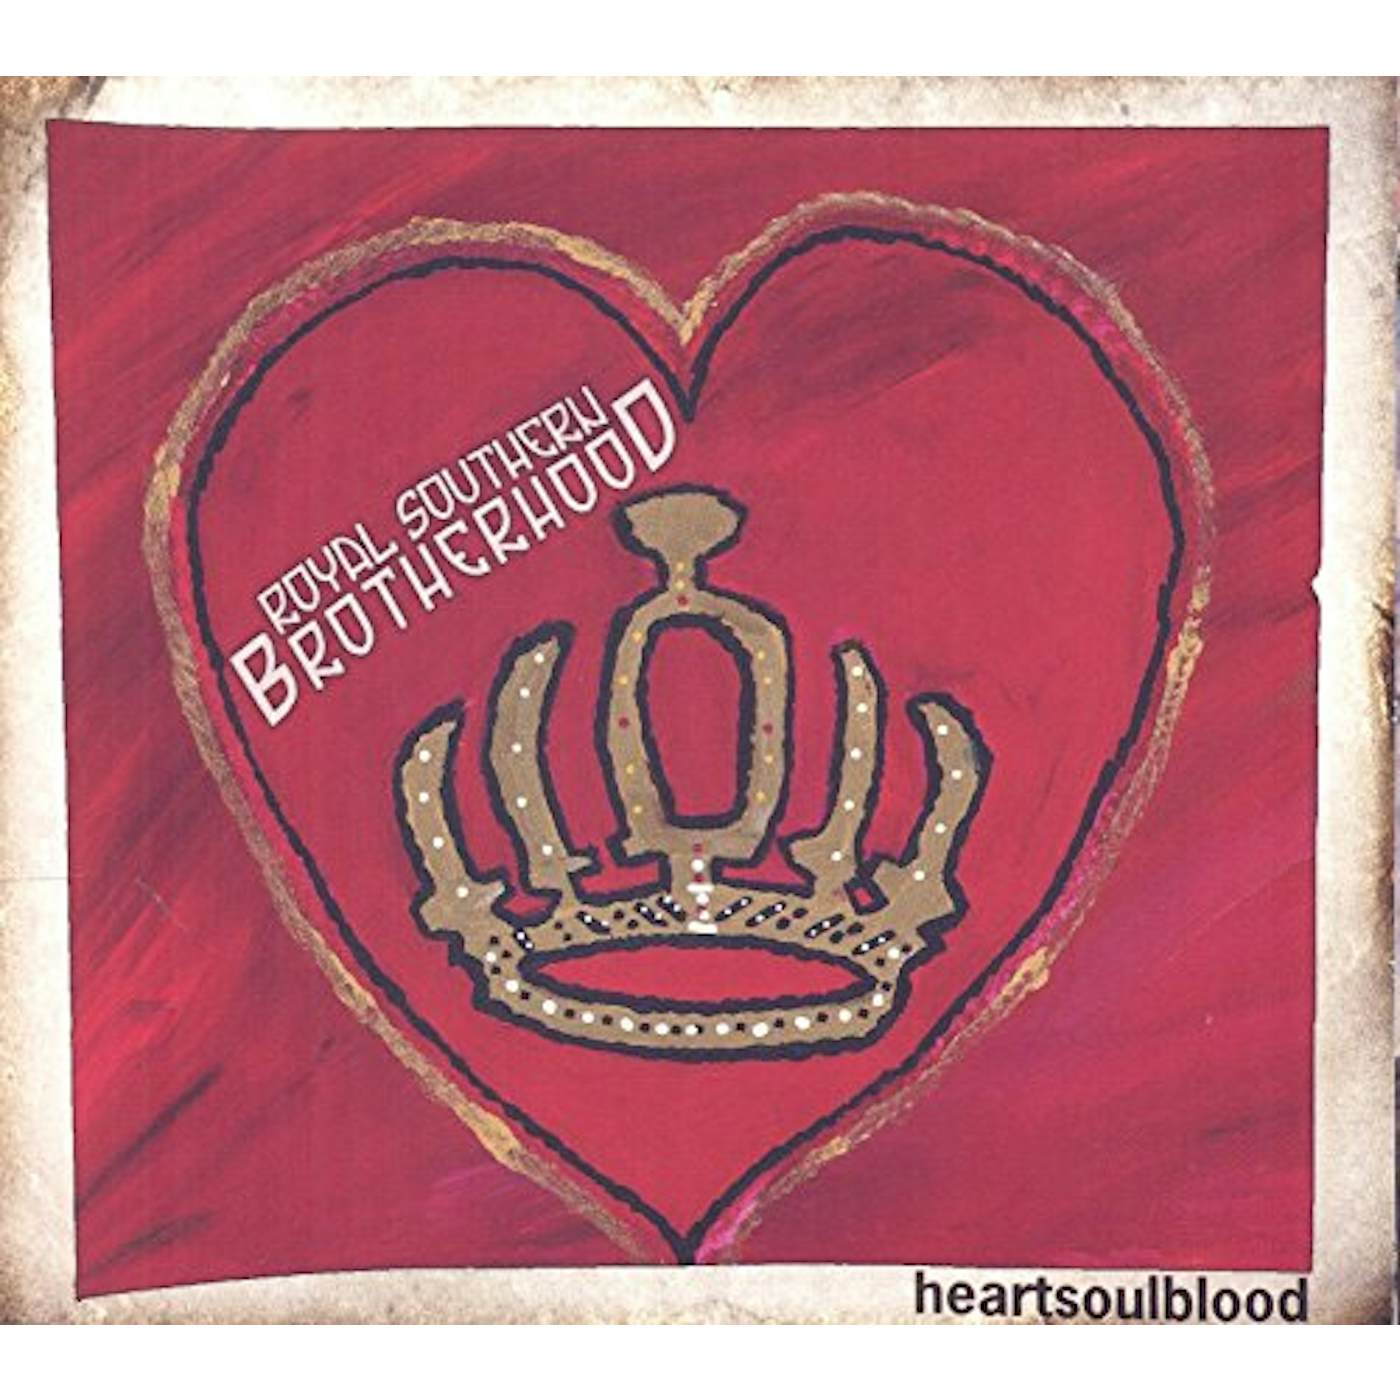 Royal Southern Brotherhood HEARTSOULBLOOD CD